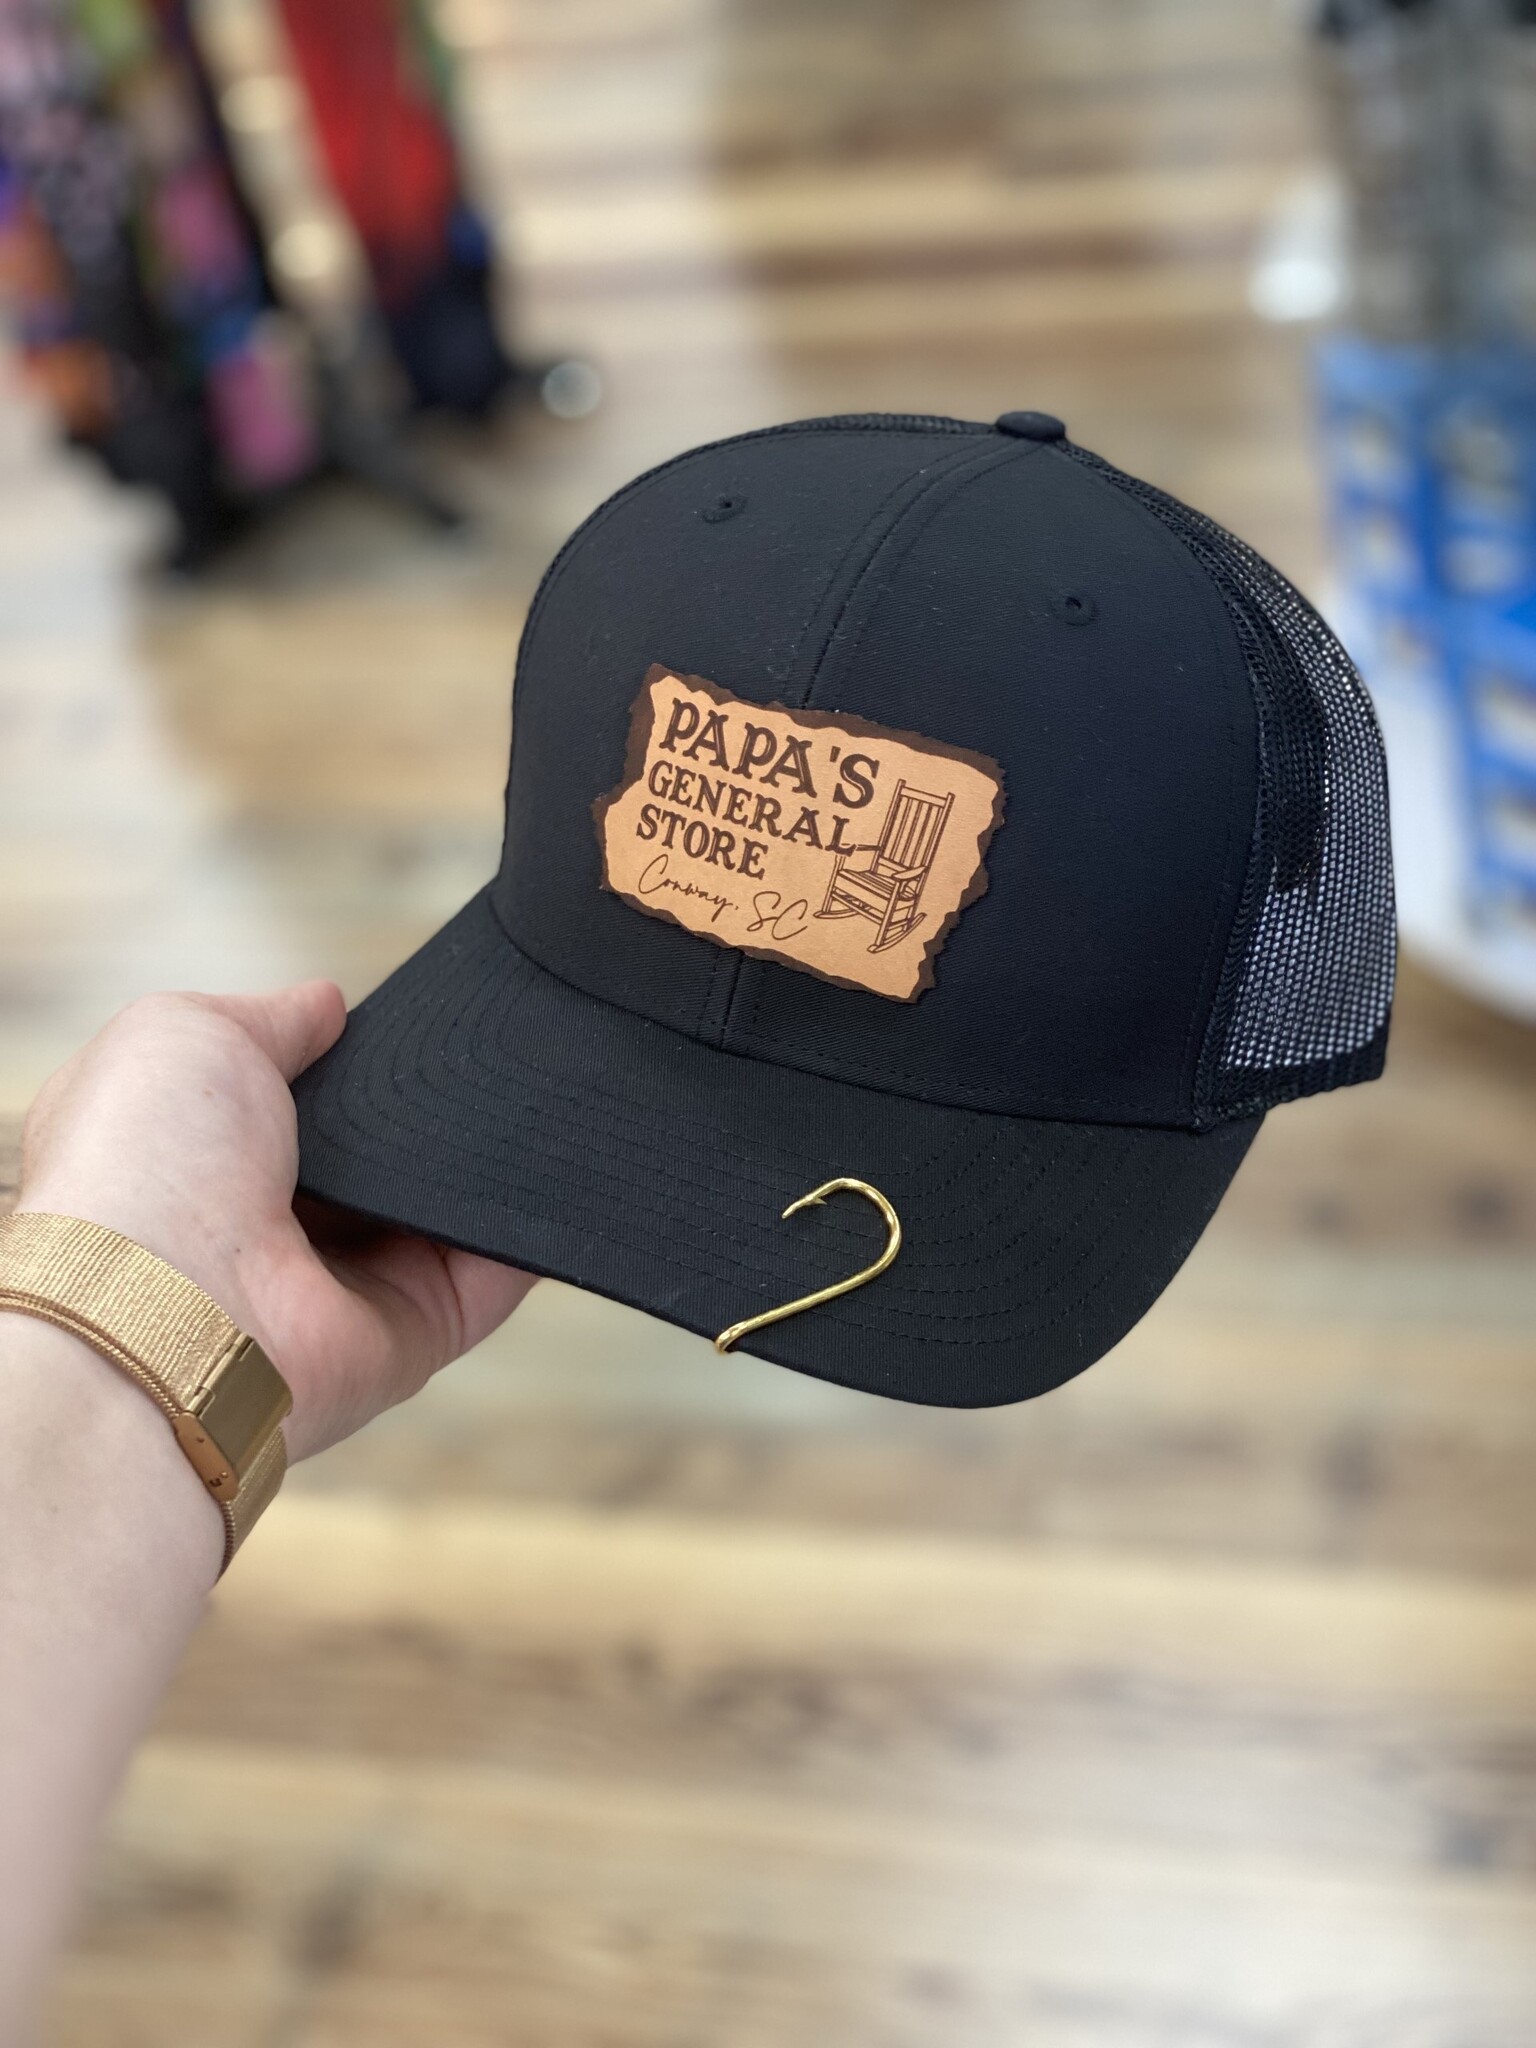 Hat Hook - Papa's General Store